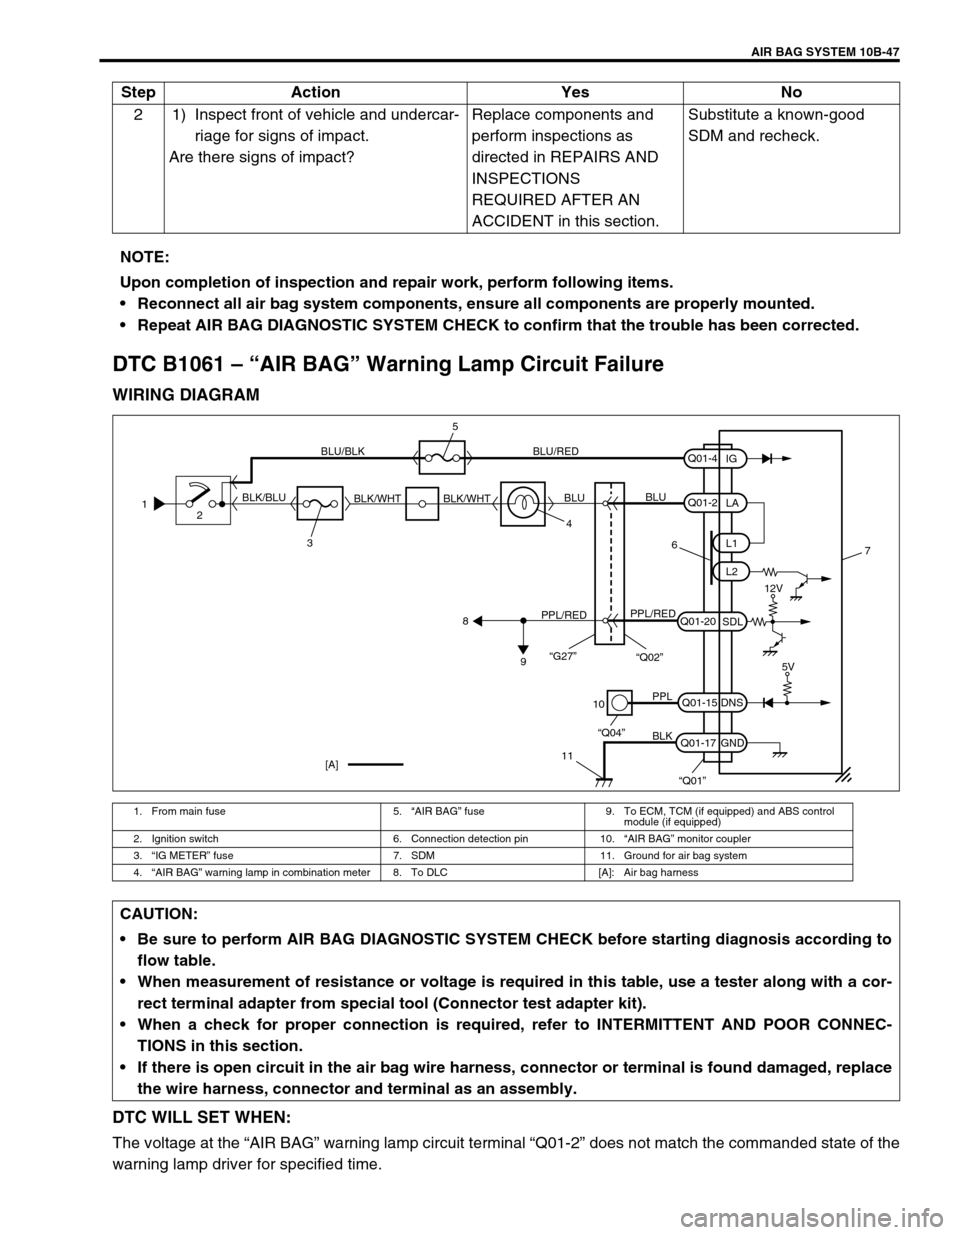 SUZUKI GRAND VITARA 2001 2.G Workshop Manual AIR BAG SYSTEM 10B-47
DTC B1061 – “AIR BAG” Warning Lamp Circuit Failure
WIRING DIAGRAM
DTC WILL SET WHEN:
The voltage at the “AIR BAG” warning lamp circuit terminal “Q01-2” does not mat